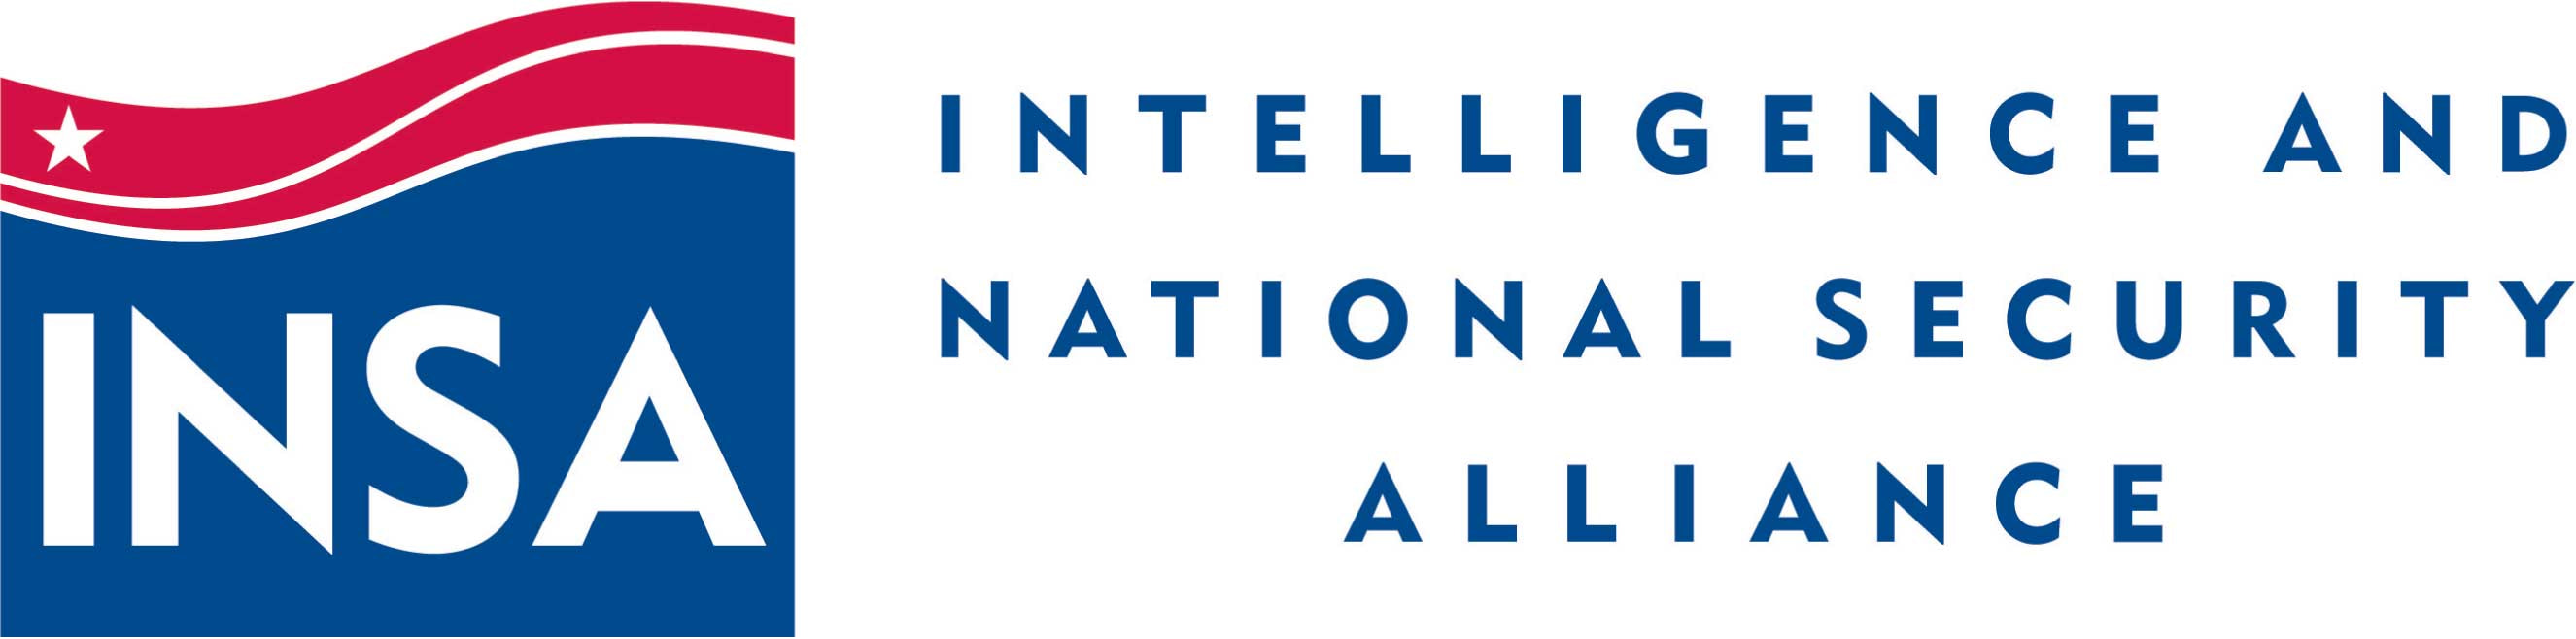 Intelligence and National Security Alliance logo